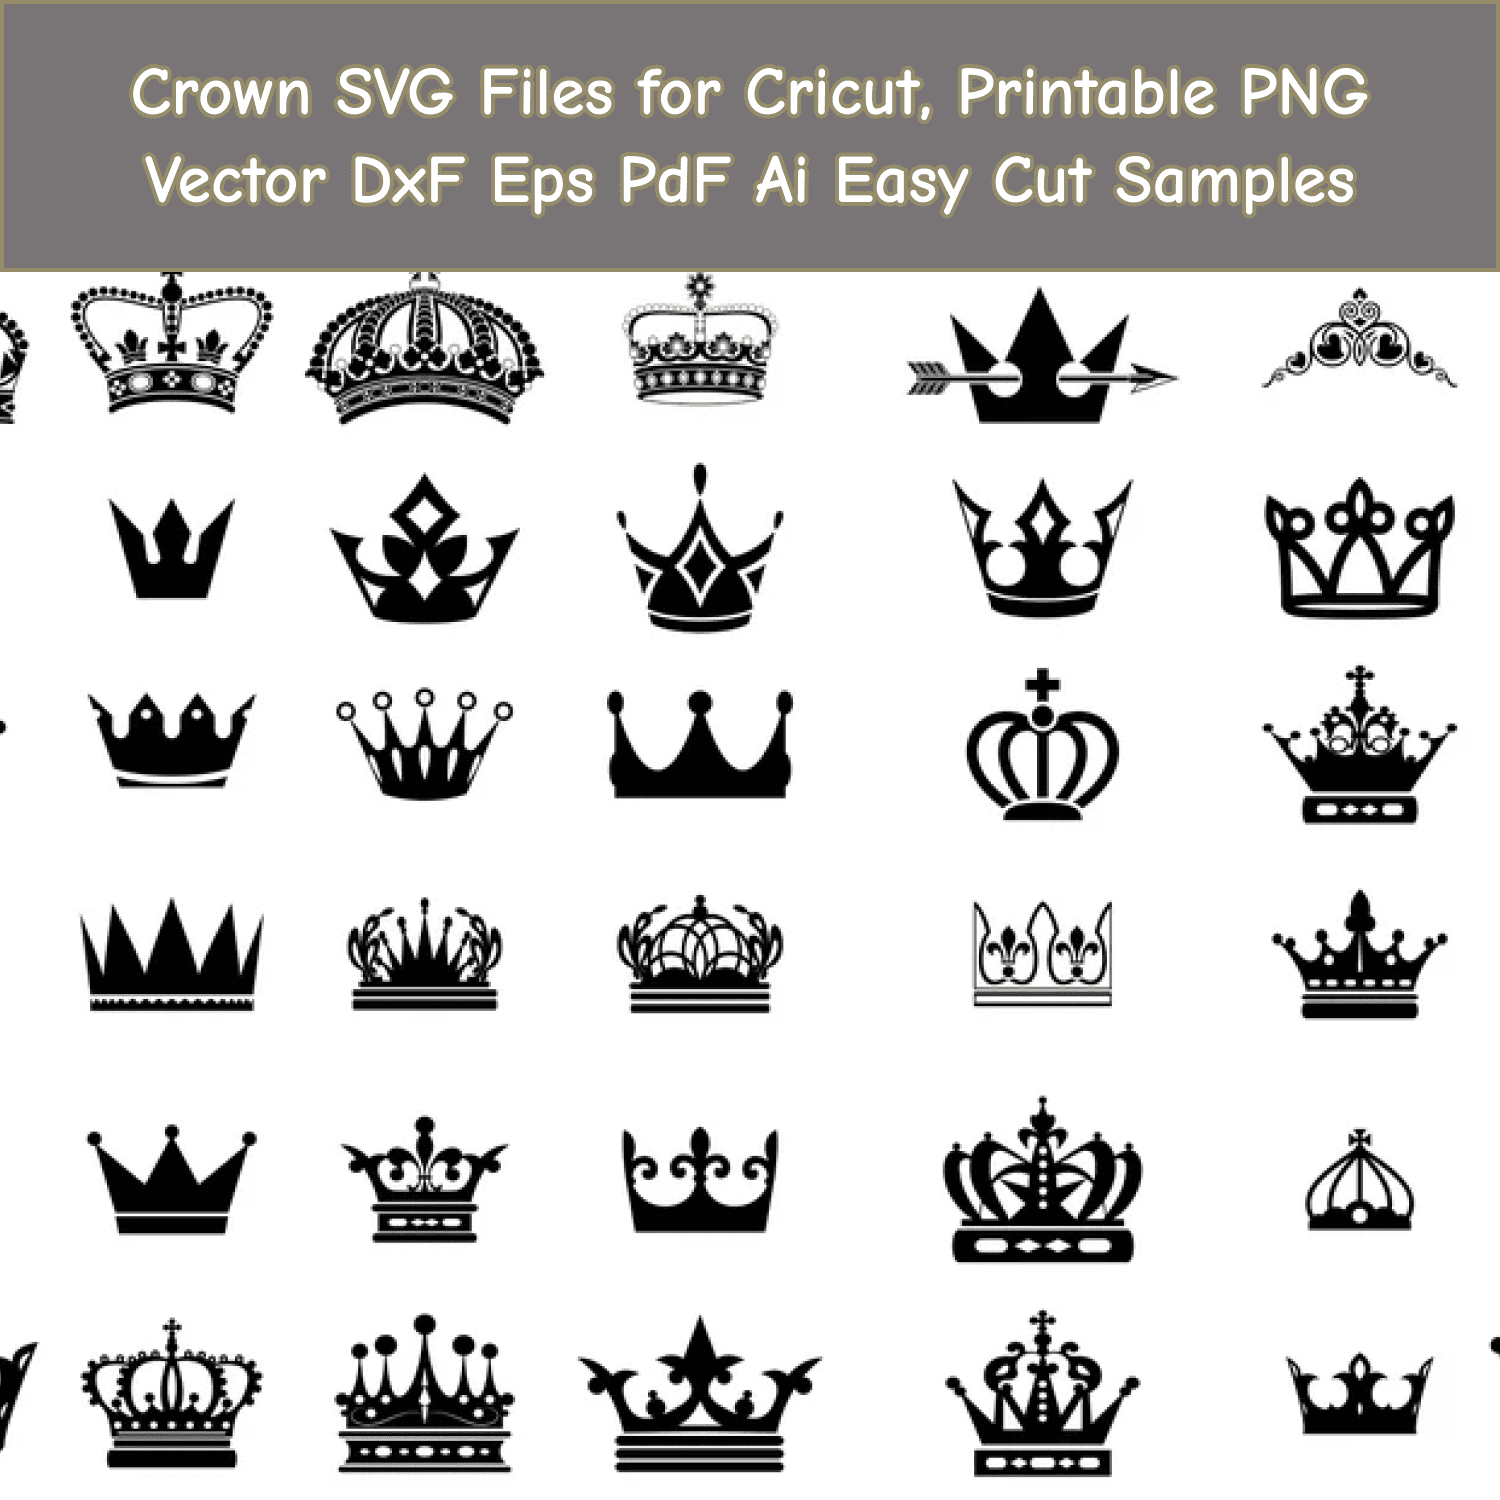 Crown SVG Files For Cricut.